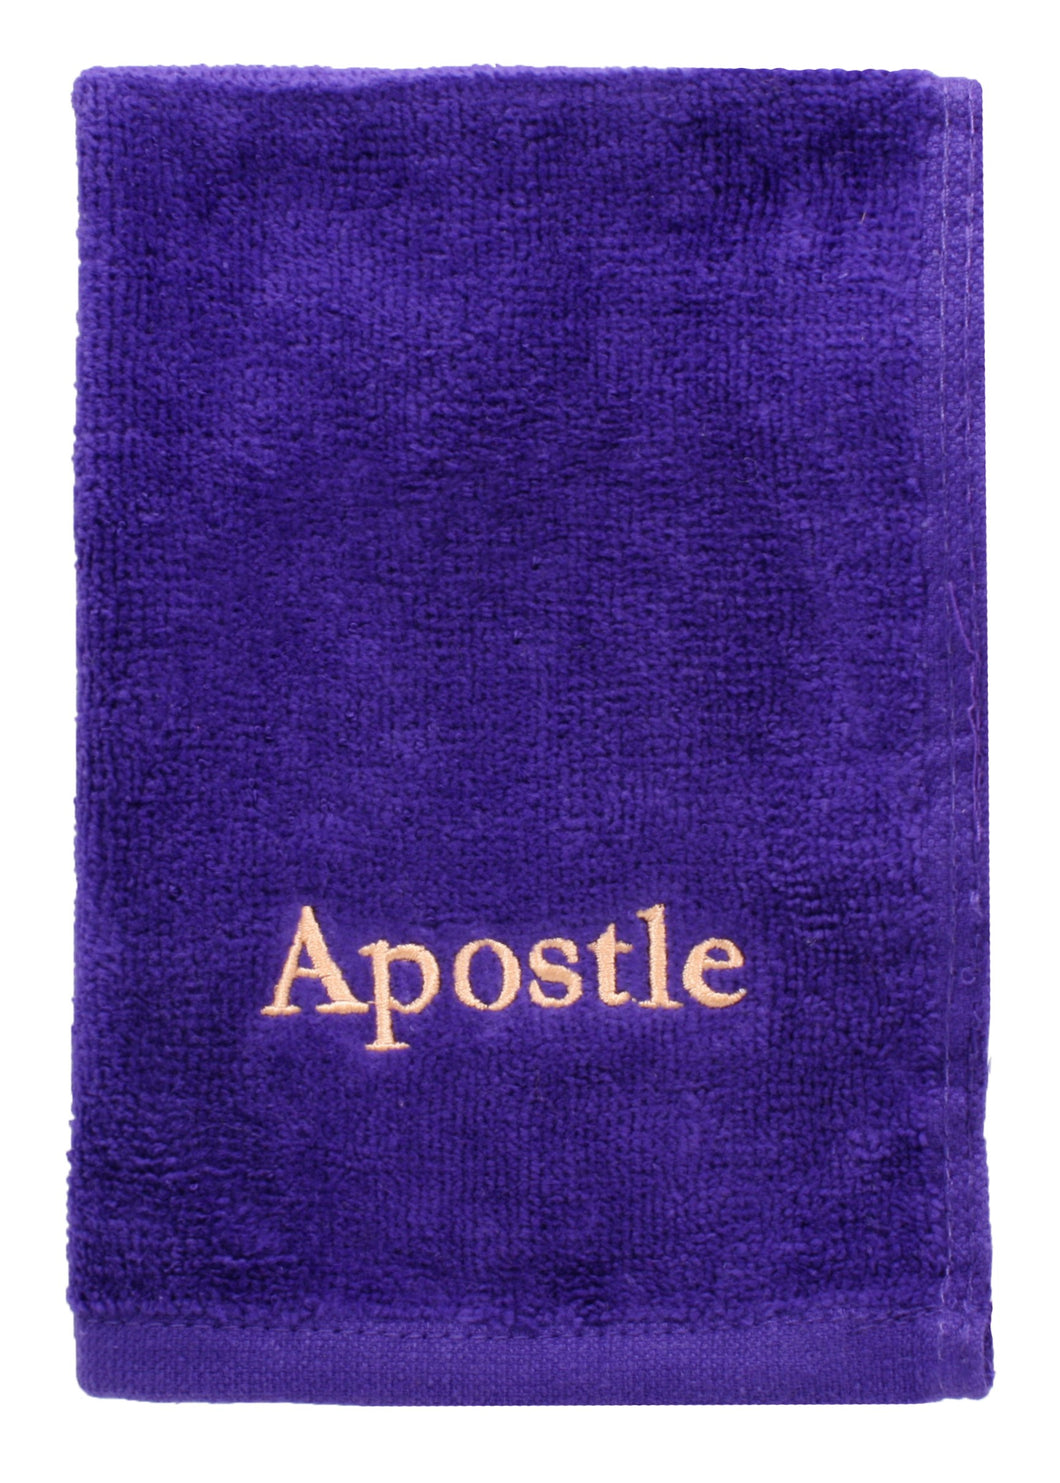 Towel-Apostle-Purple w/Gold Lettering